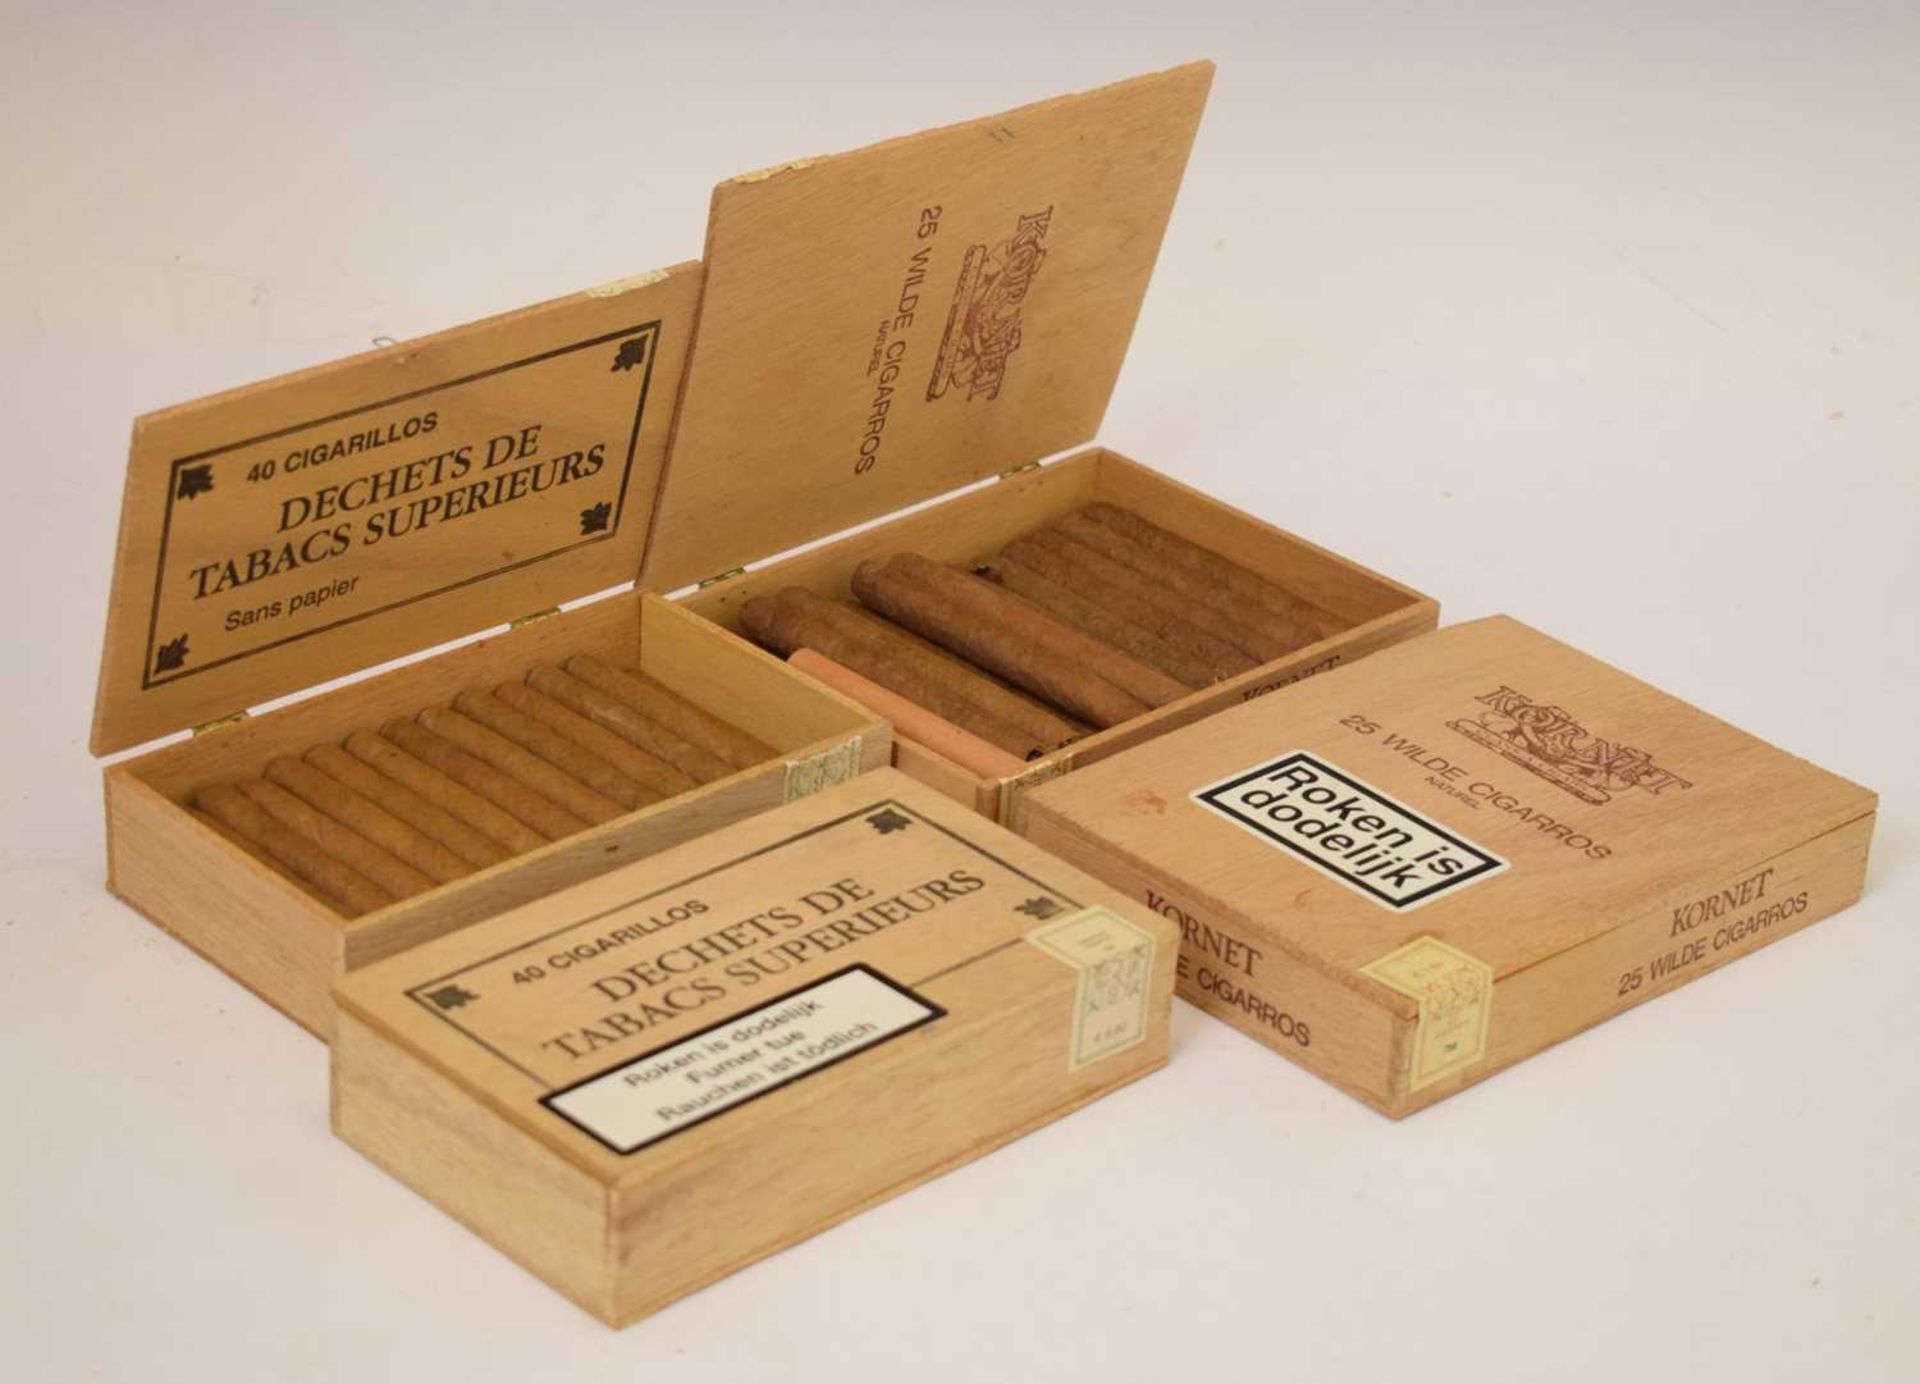 Dechets de Tabacs Superieurs - Cigarillos, and Kornet Wilde Cigarros